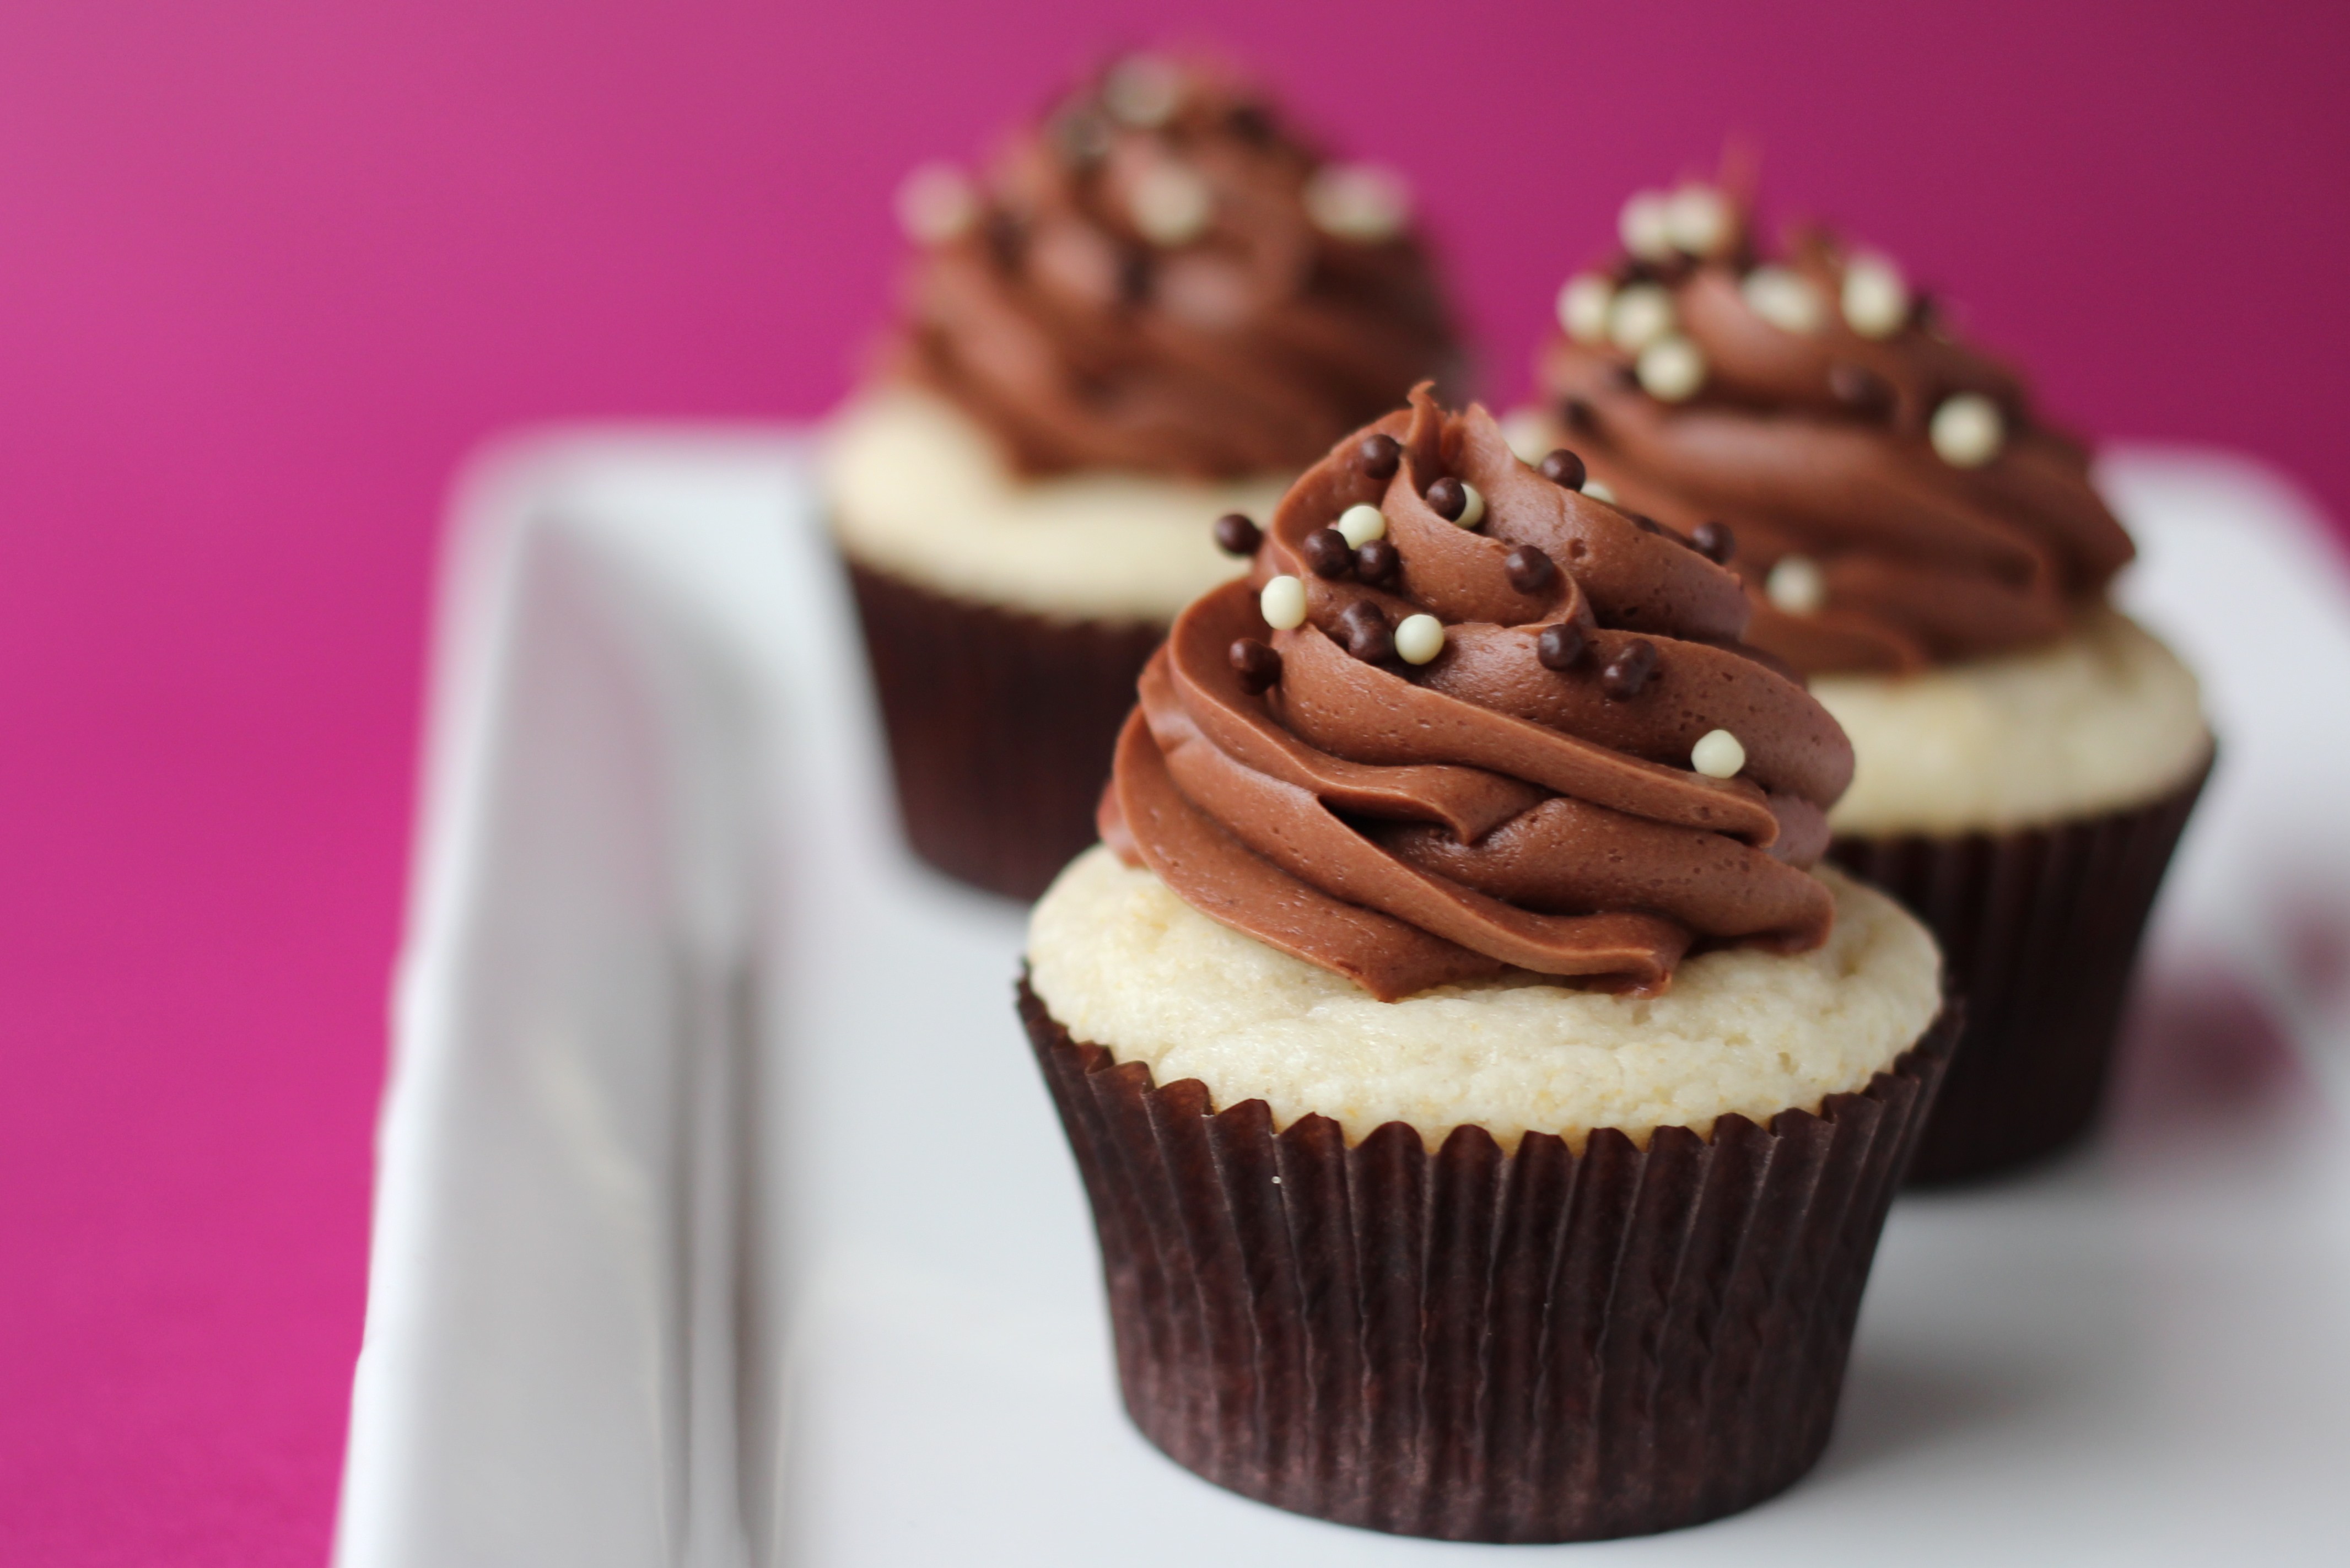 https://www.yourcupofcake.com/wp-content/uploads/2012/02/Chocolate-Vanilla-Cupcakes.jpg